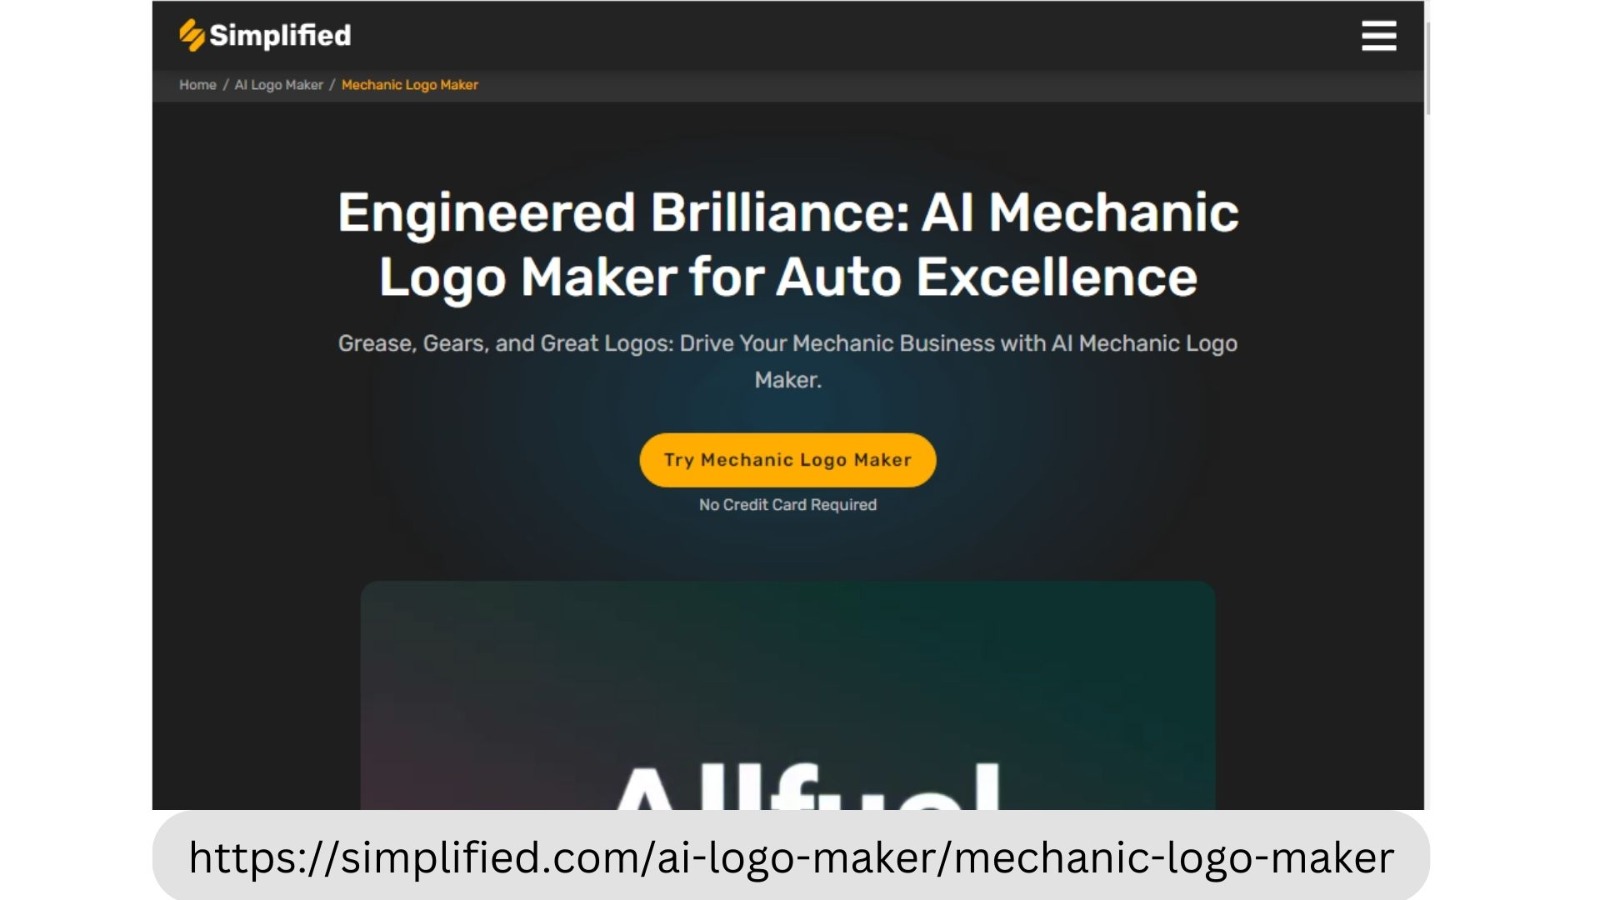 AI Mechanic Logo Maker Cover Image